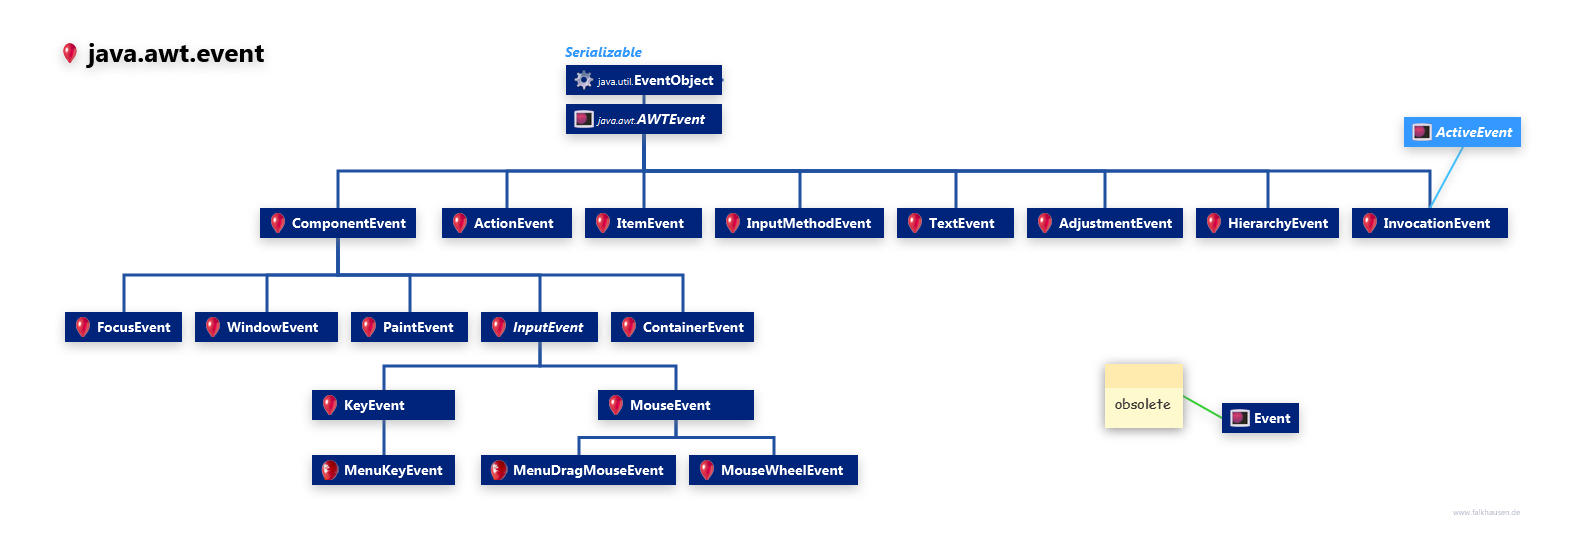 java.awt.event Event Hierarchy class diagram and api documentation for Java 8